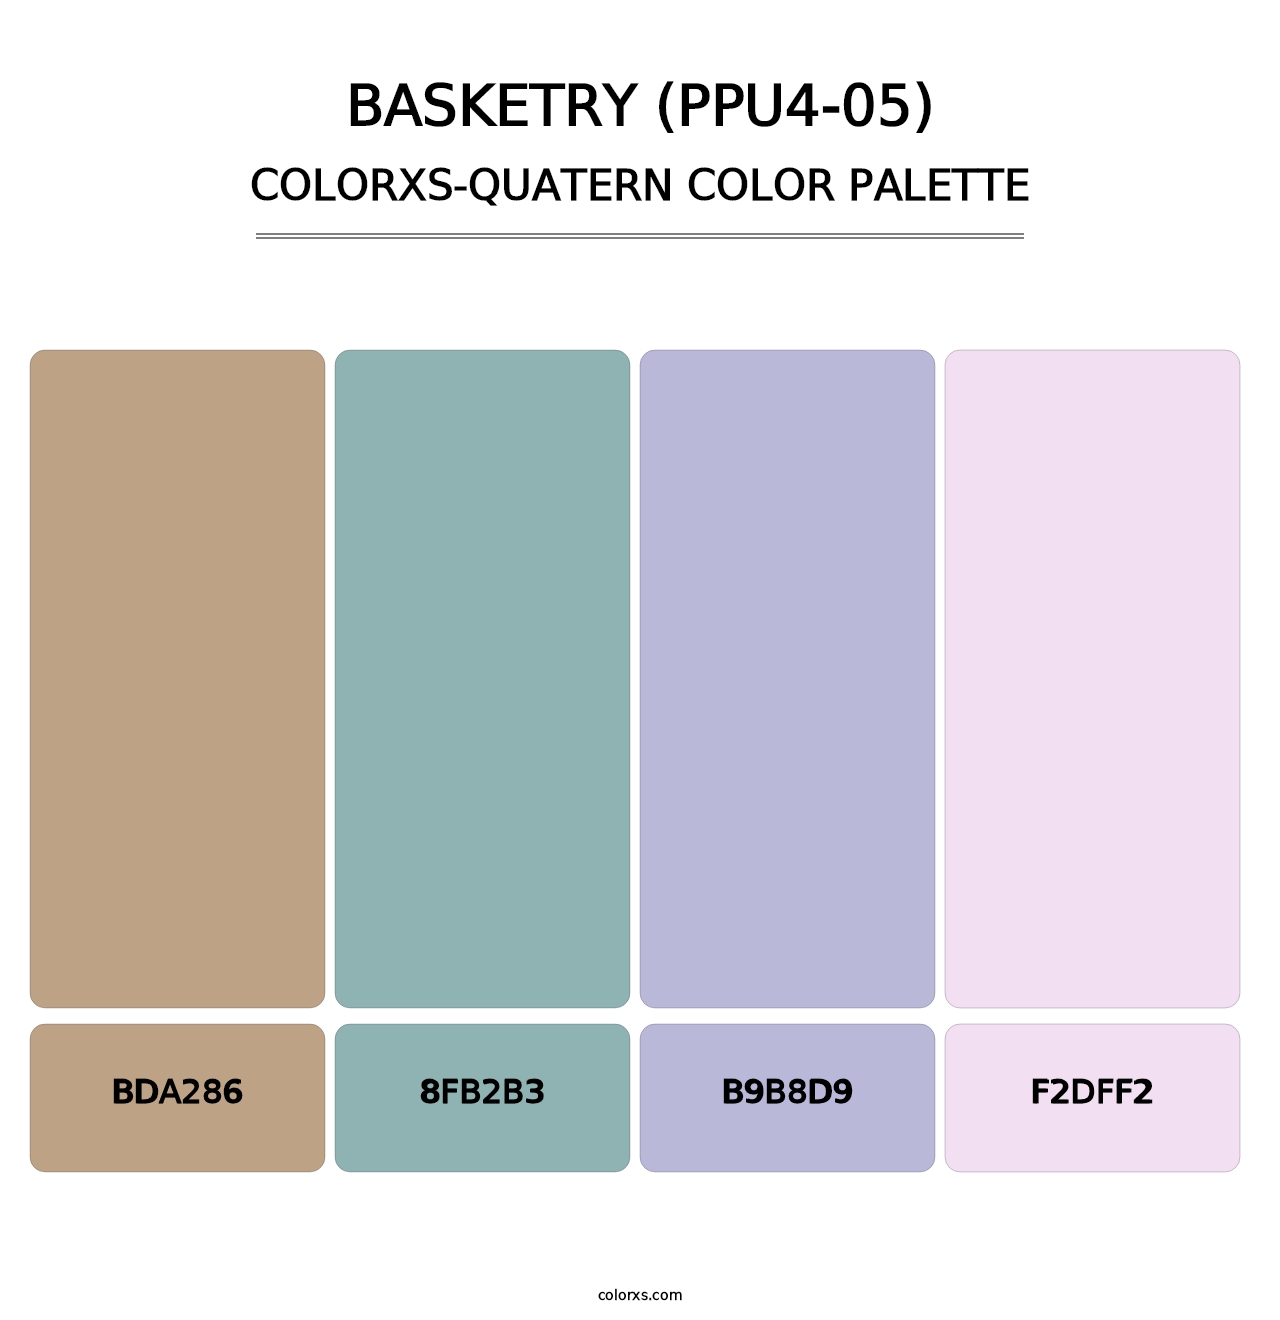 Basketry (PPU4-05) - Colorxs Quatern Palette